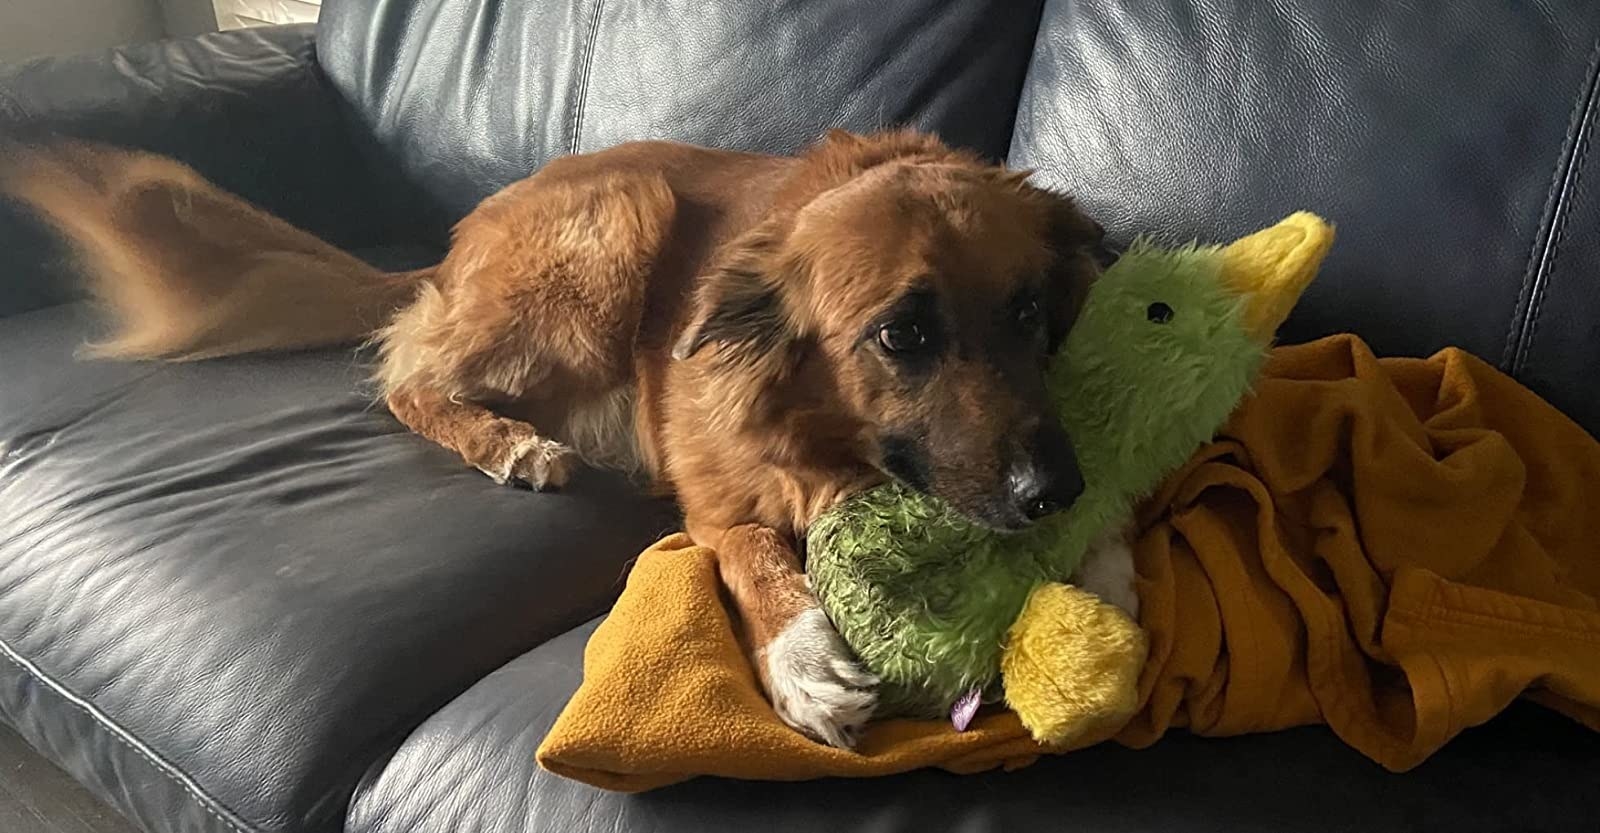 Brown dog cuddling green duck plush toy